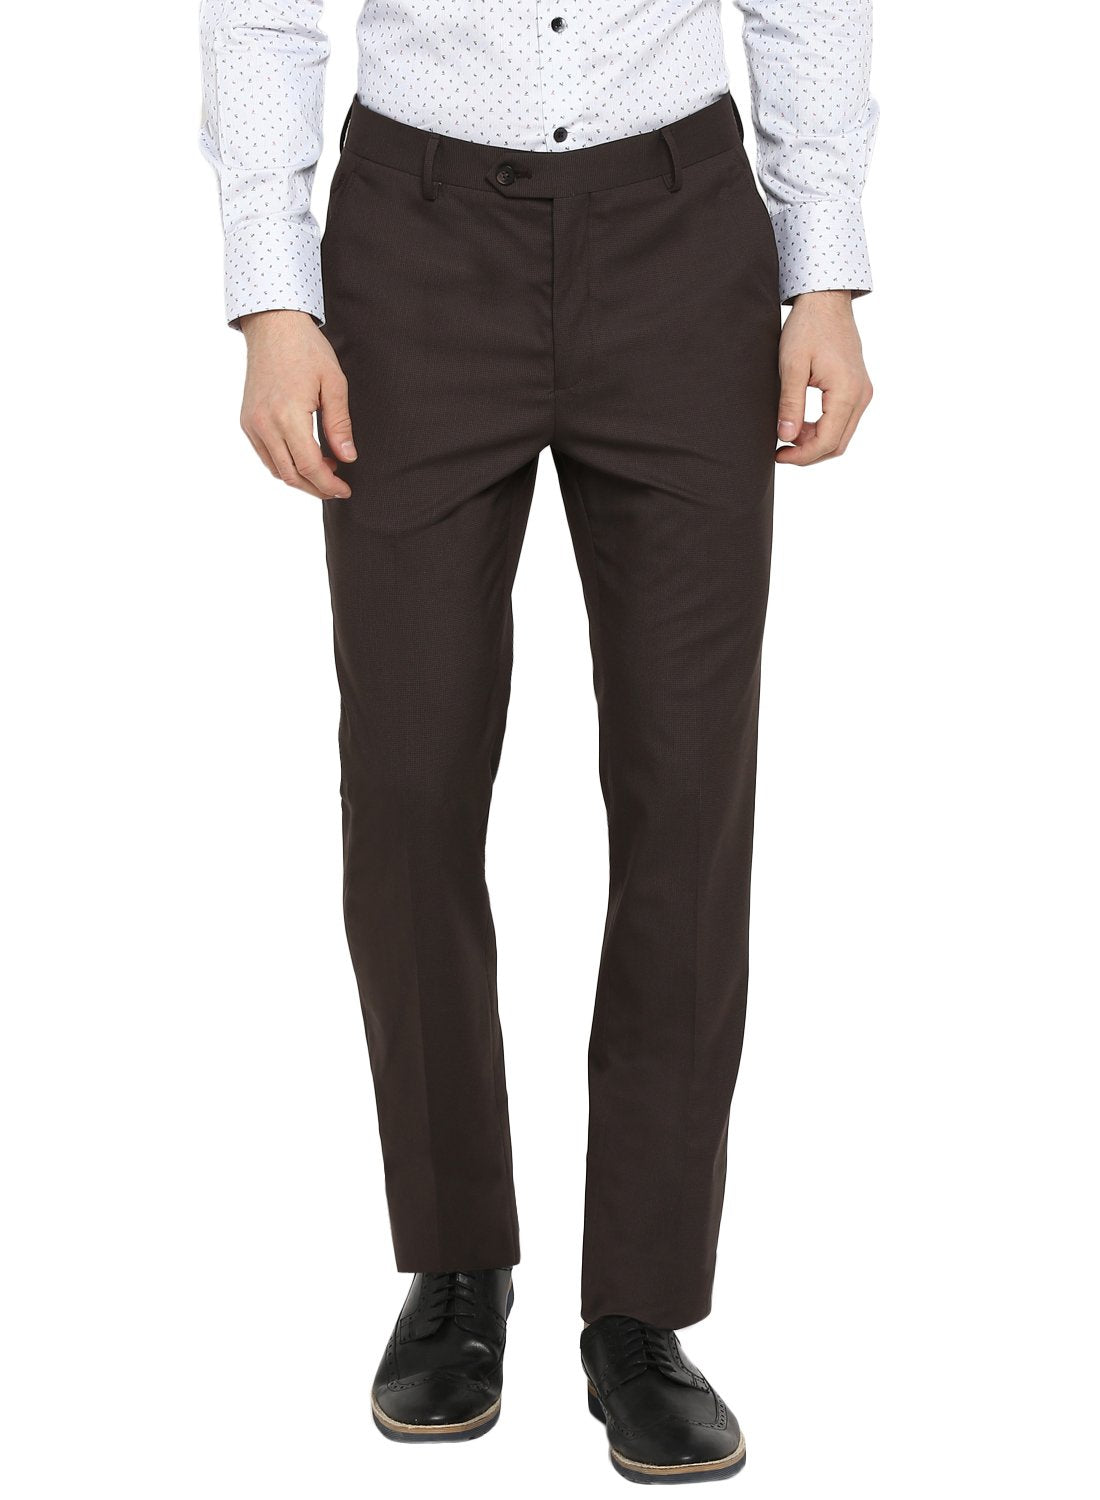 Zara Men Dark Brown Formal/Office/Semi formal pants/trousers, Men's  Fashion, Bottoms, Trousers on Carousell